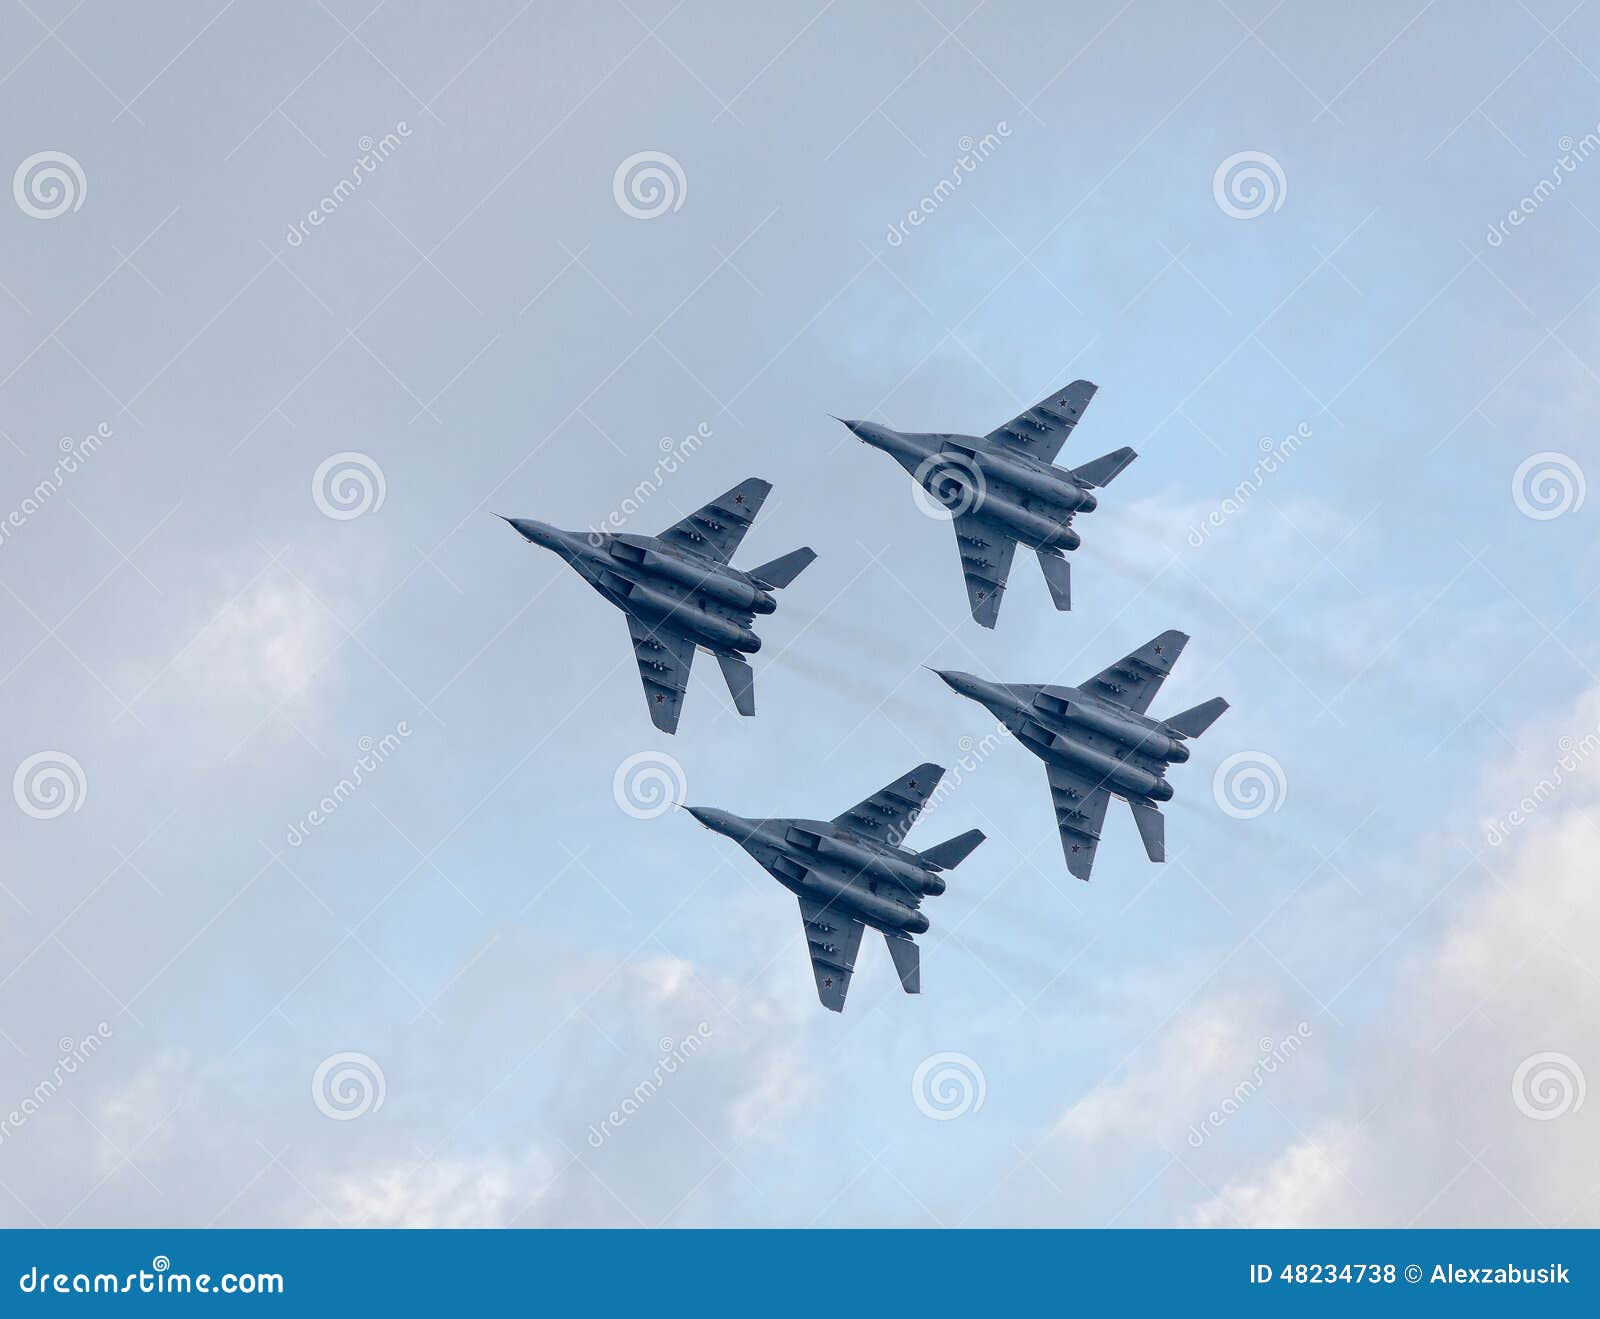 military jet planes showing aerobatics